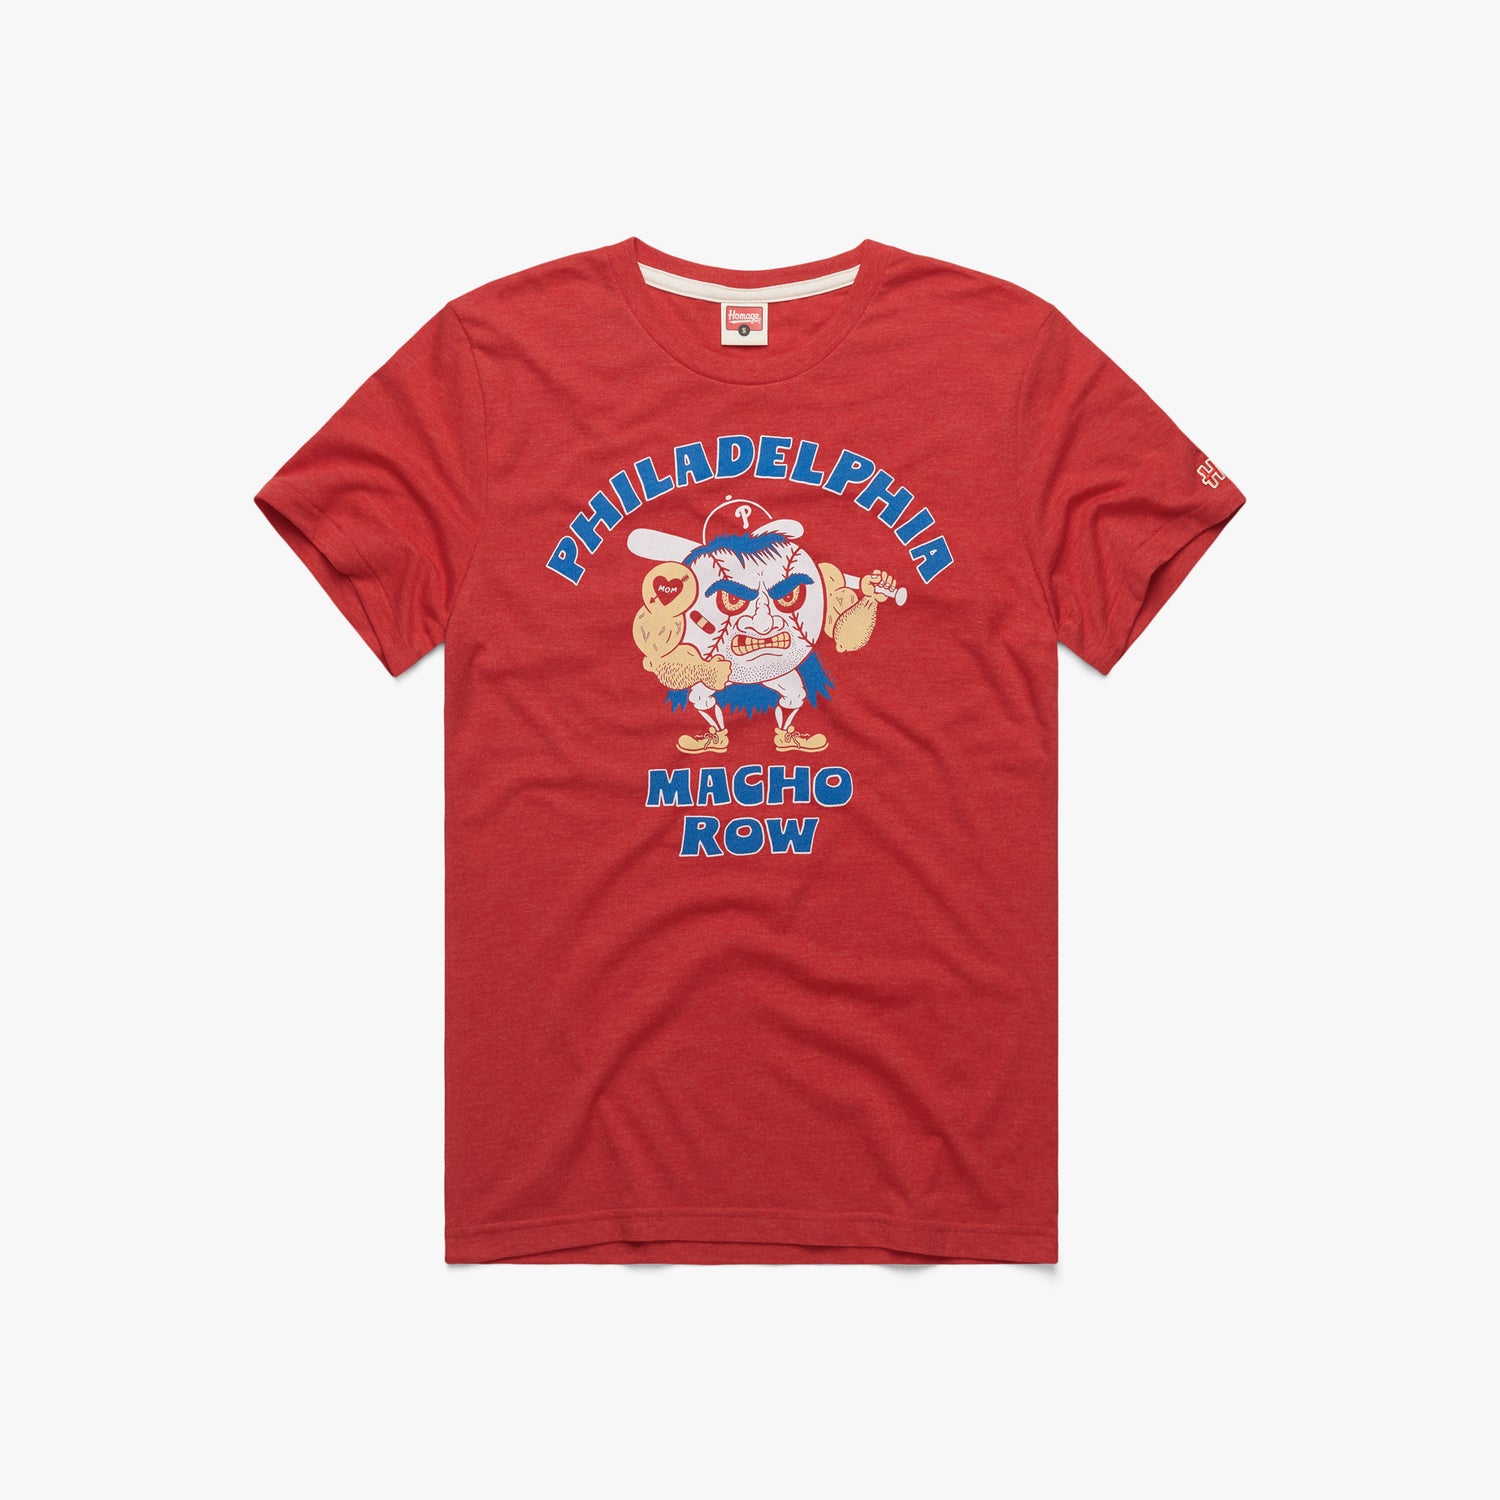 Vintage 1993 MLB Philadelphia Phillies Cartoon World Series Shirt